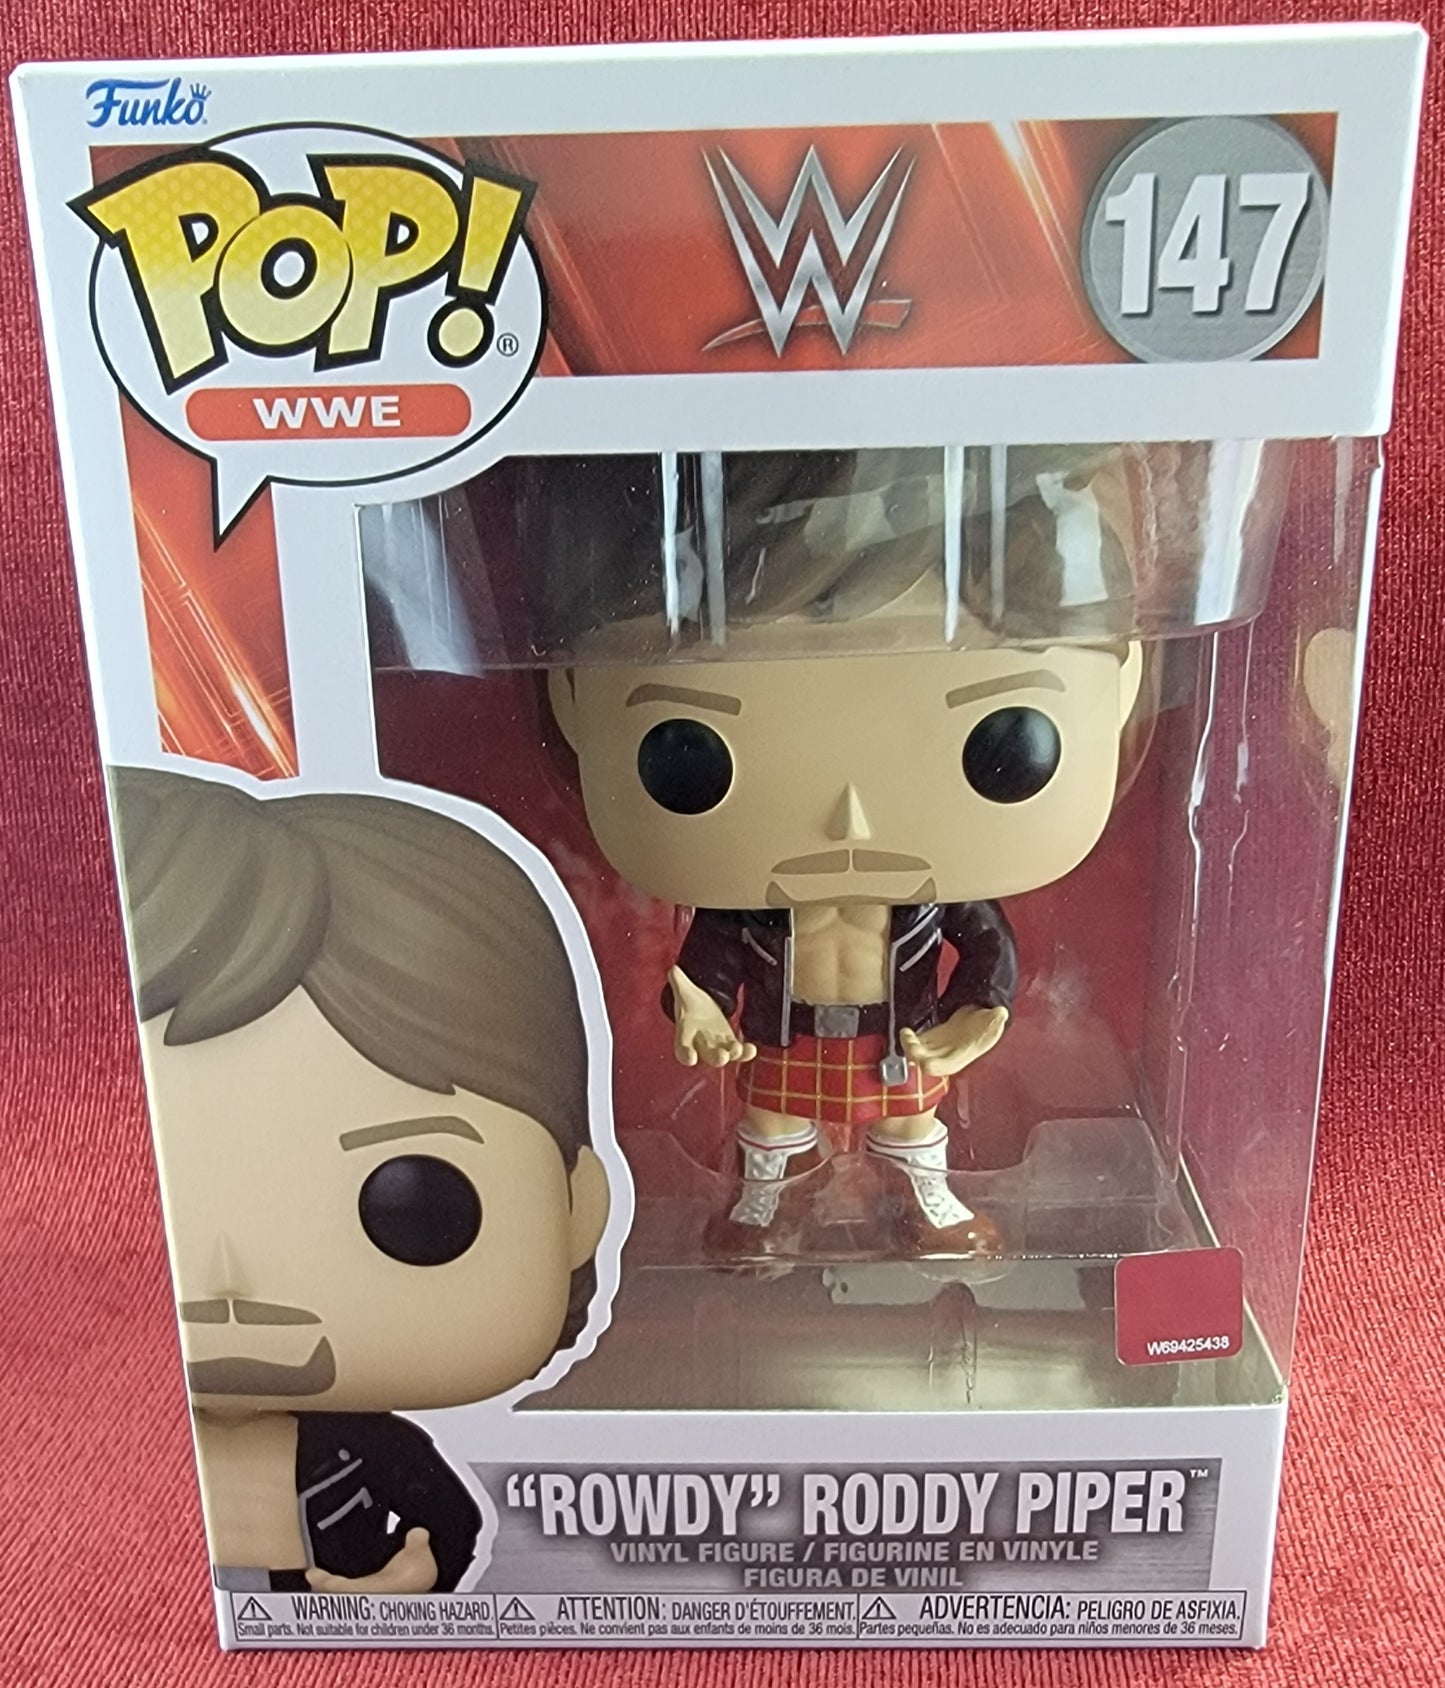 "Rowdy" Roddy Piper funko # 147 (nib)
With pop protector